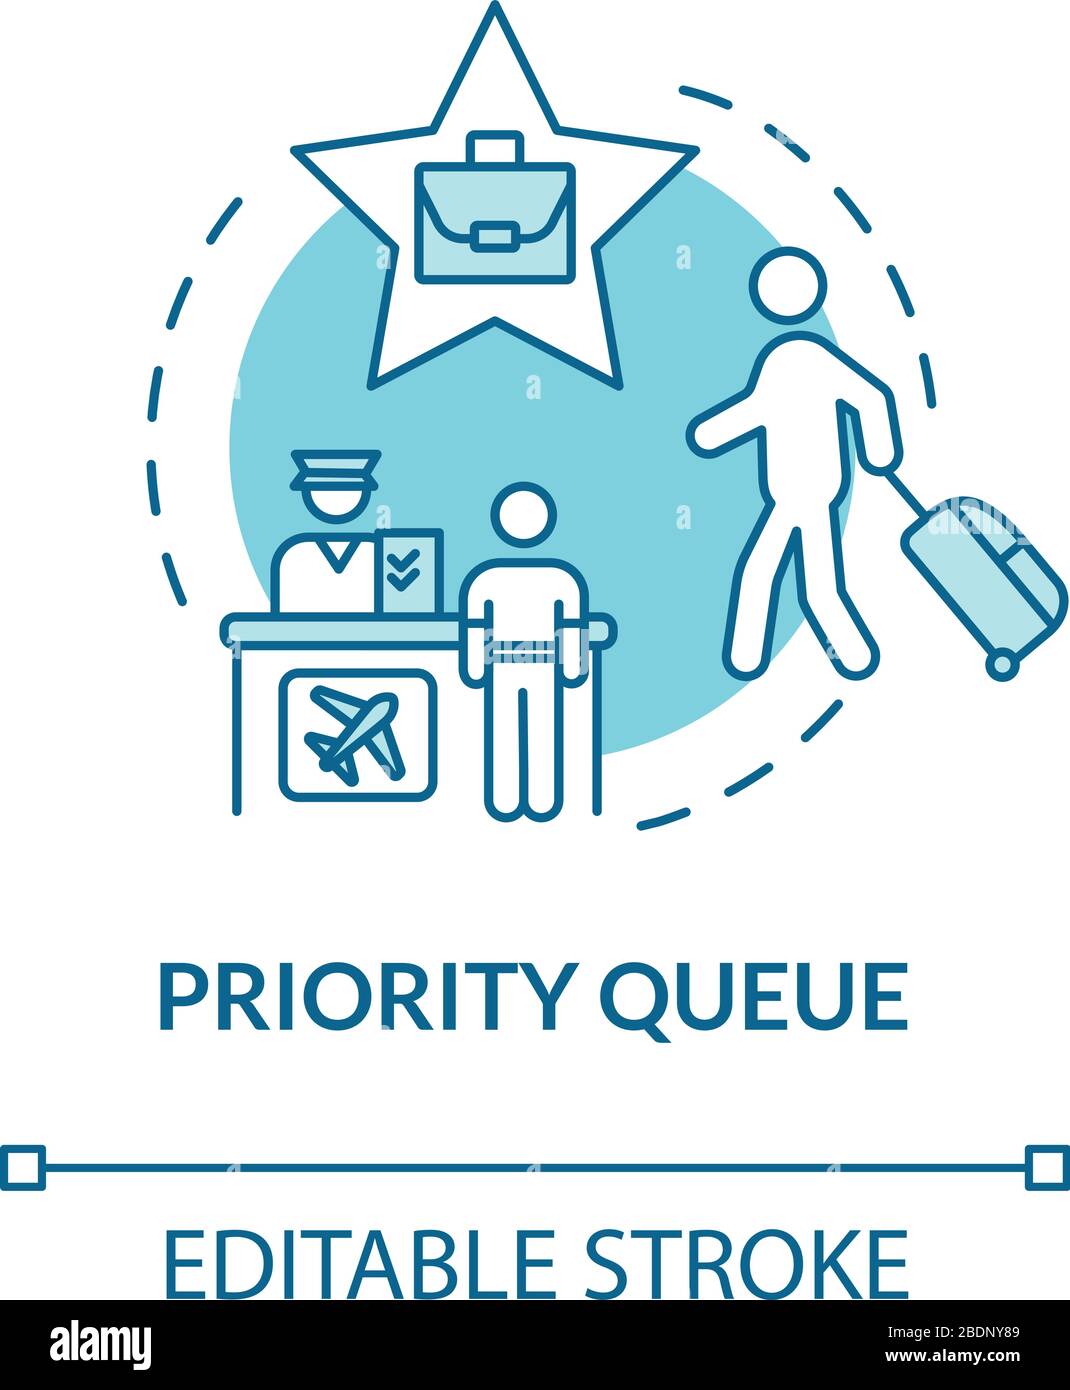 Priority queue concept icon. Luxury class flight benefit idea thin line illustration. Passport control, access for VIP passengers. Vector isolated Stock Vector